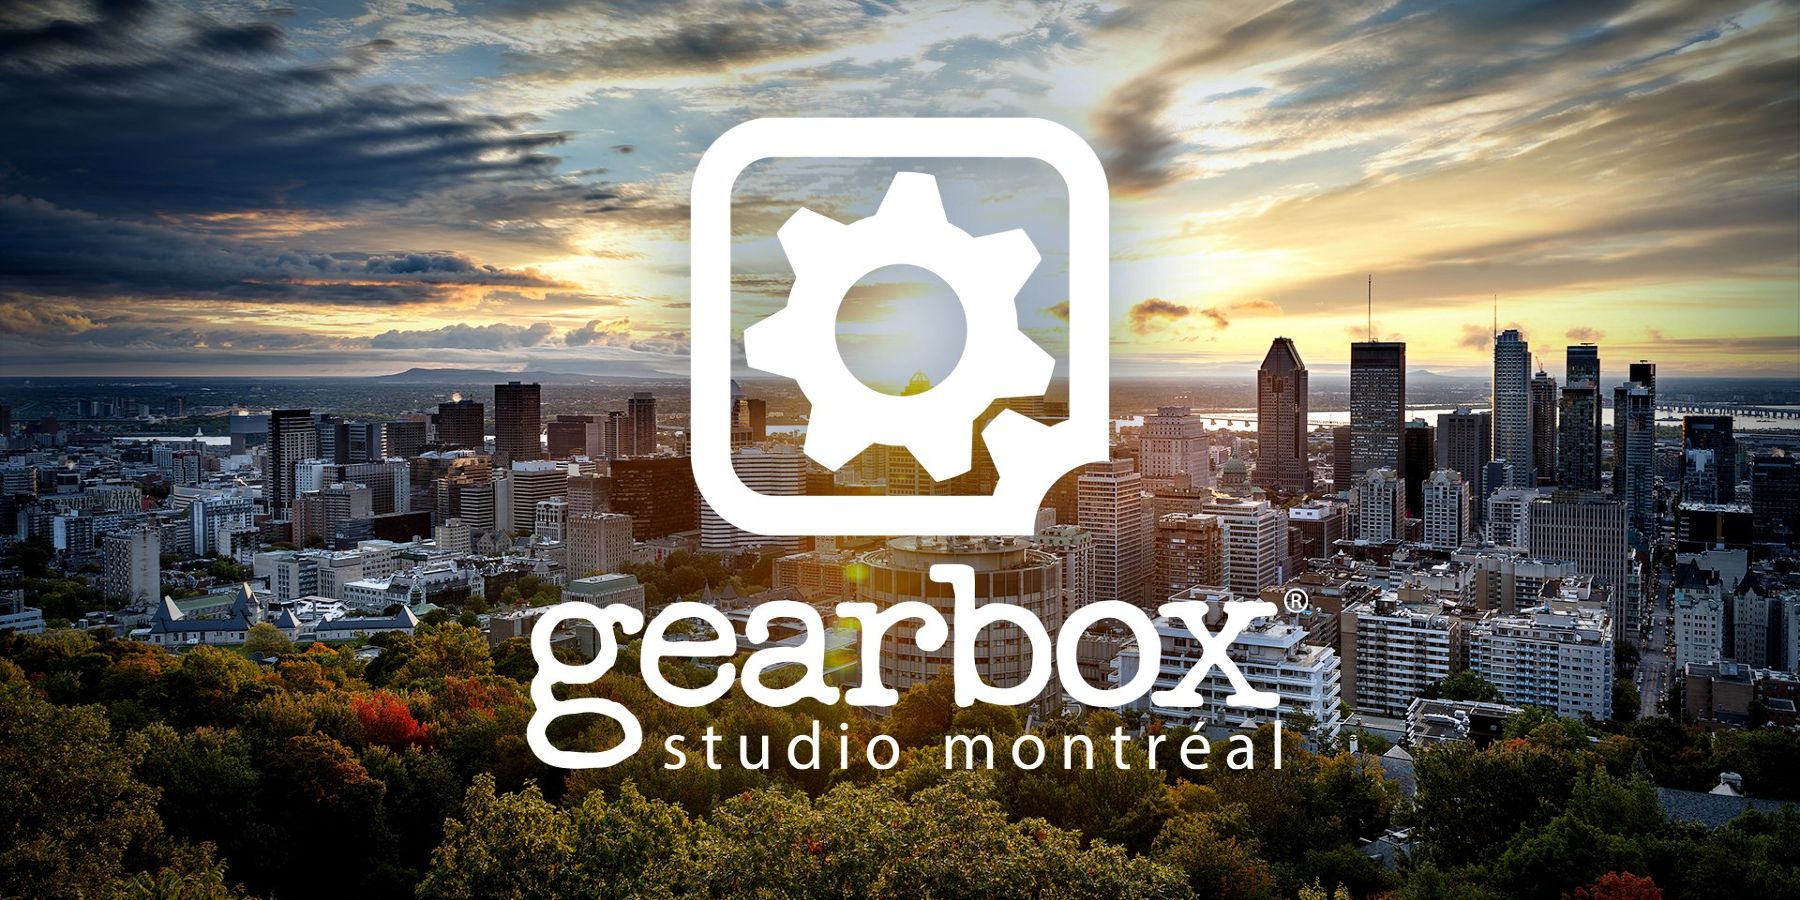 gearbox studio montreal logo